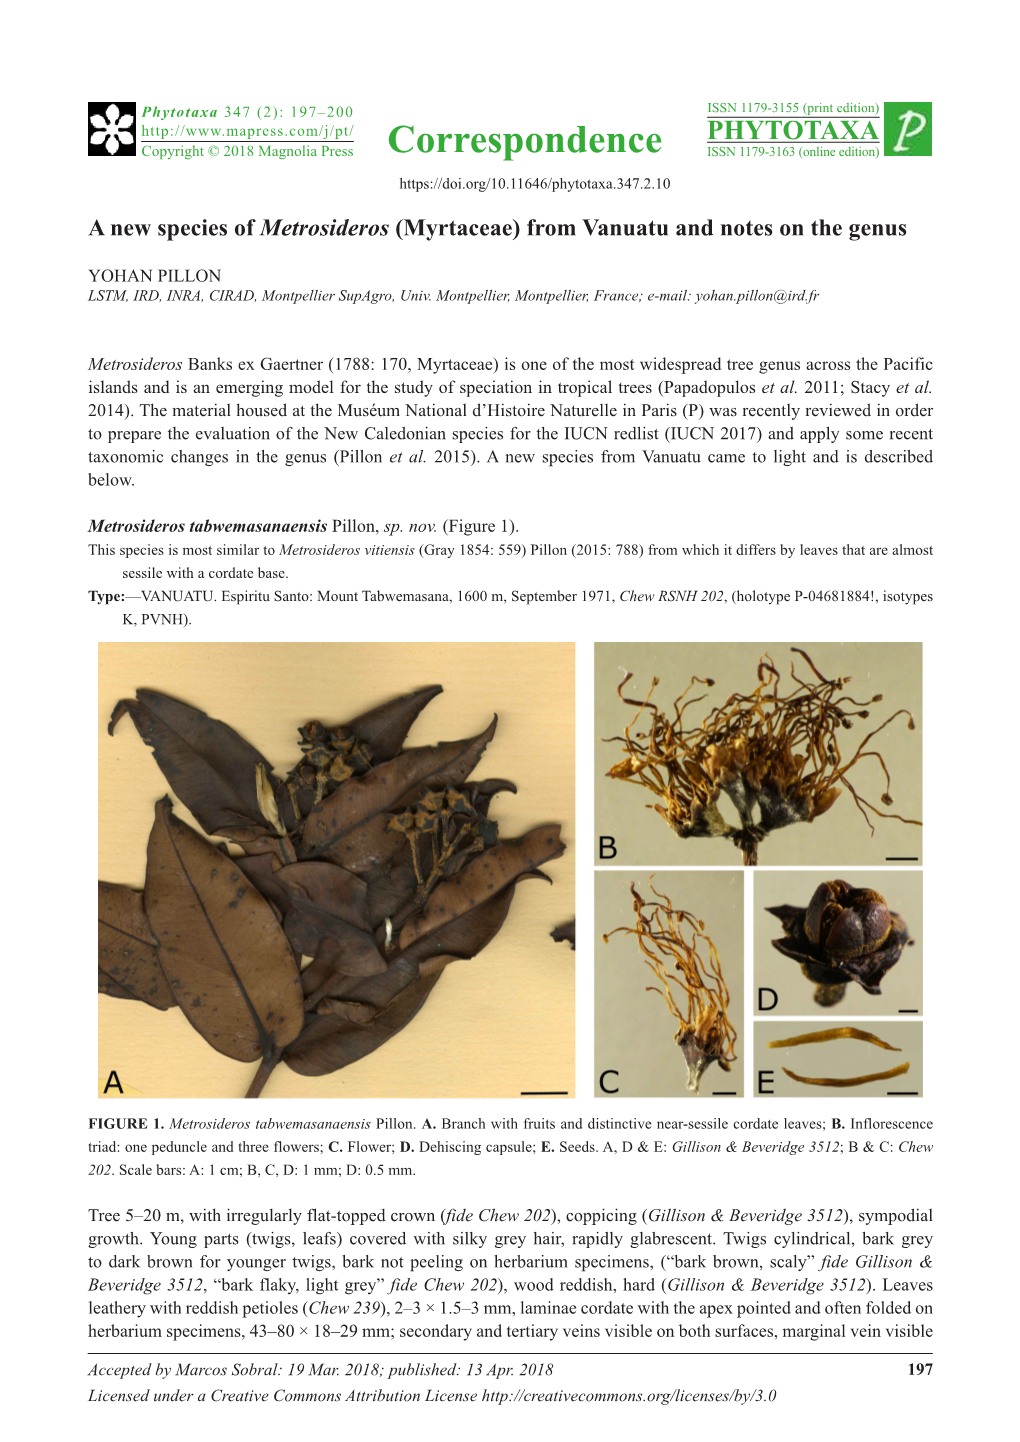 A New Species of Metrosideros (Myrtaceae) from Vanuatu and Notes on the Genus